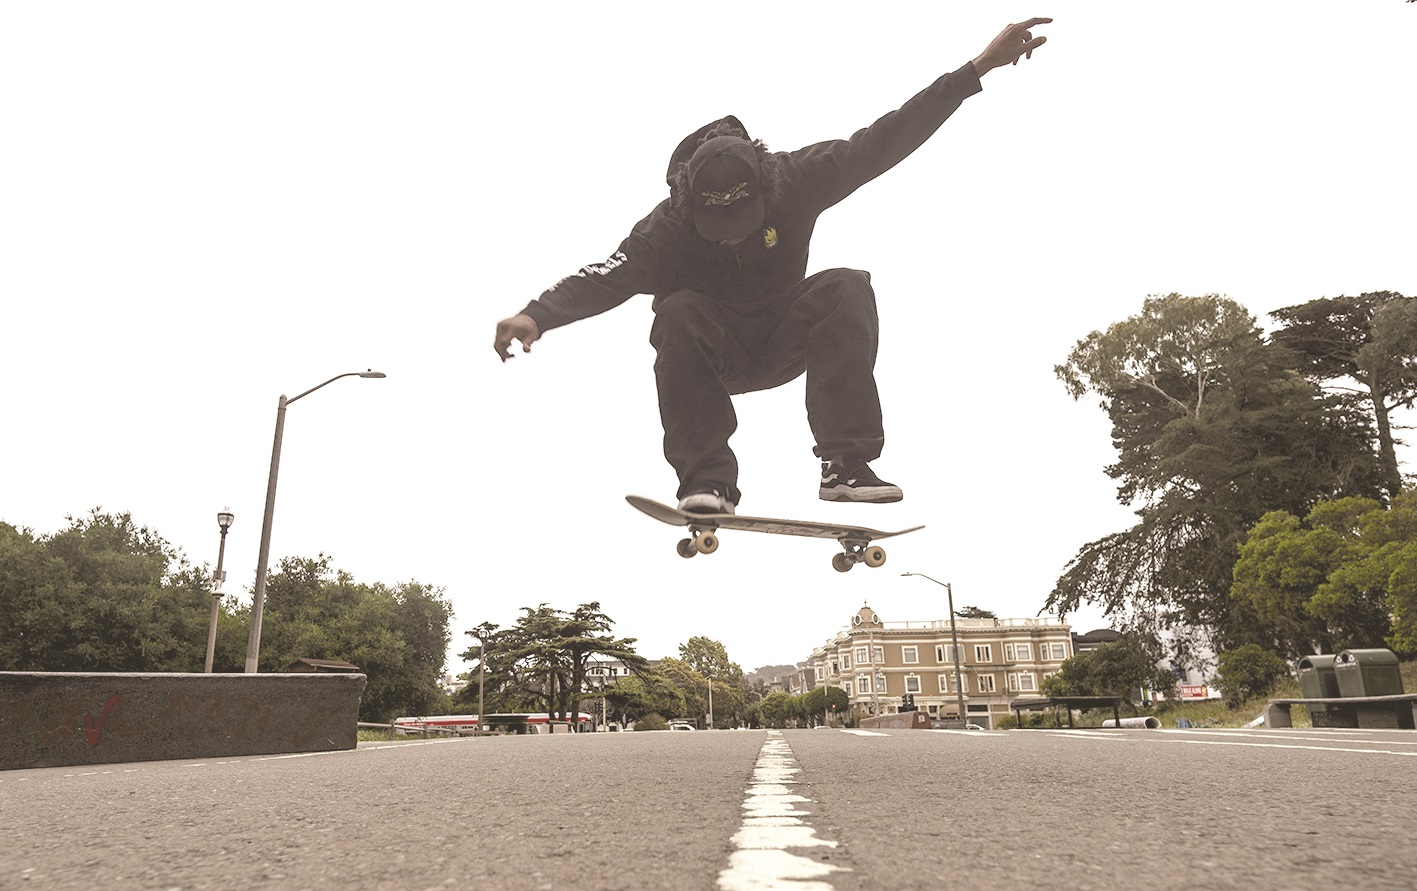 Shot twice, completely blind: US teen is still skateboarding